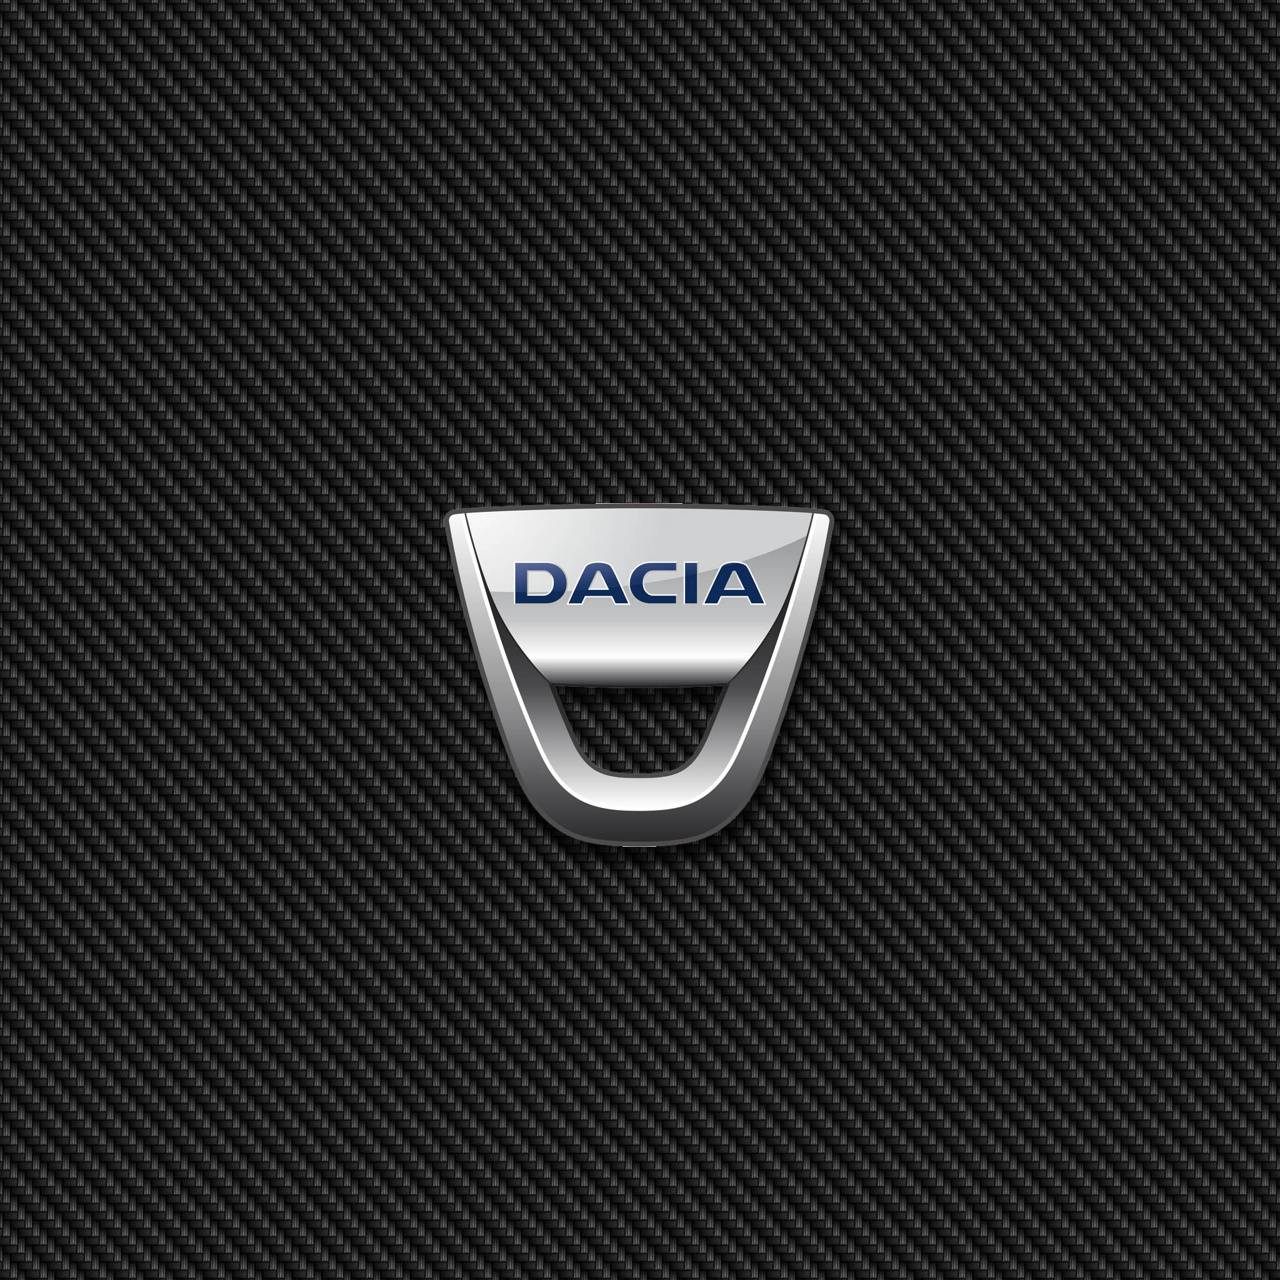 Dacia Wallpapers